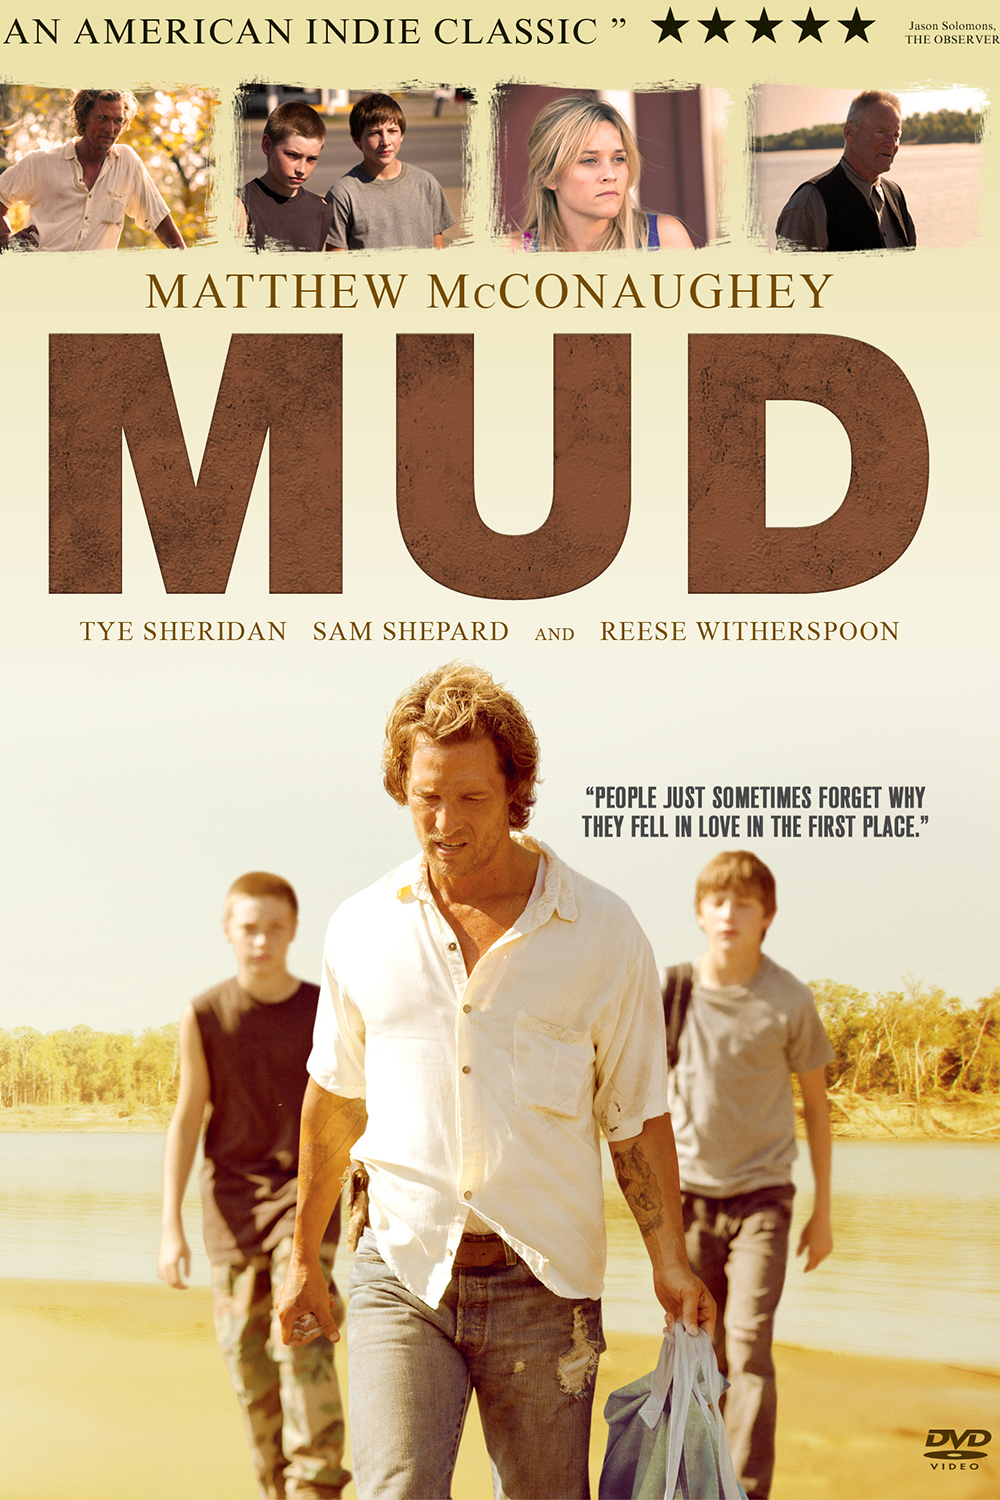 the-signal-watch-movie-watch-mud-2012